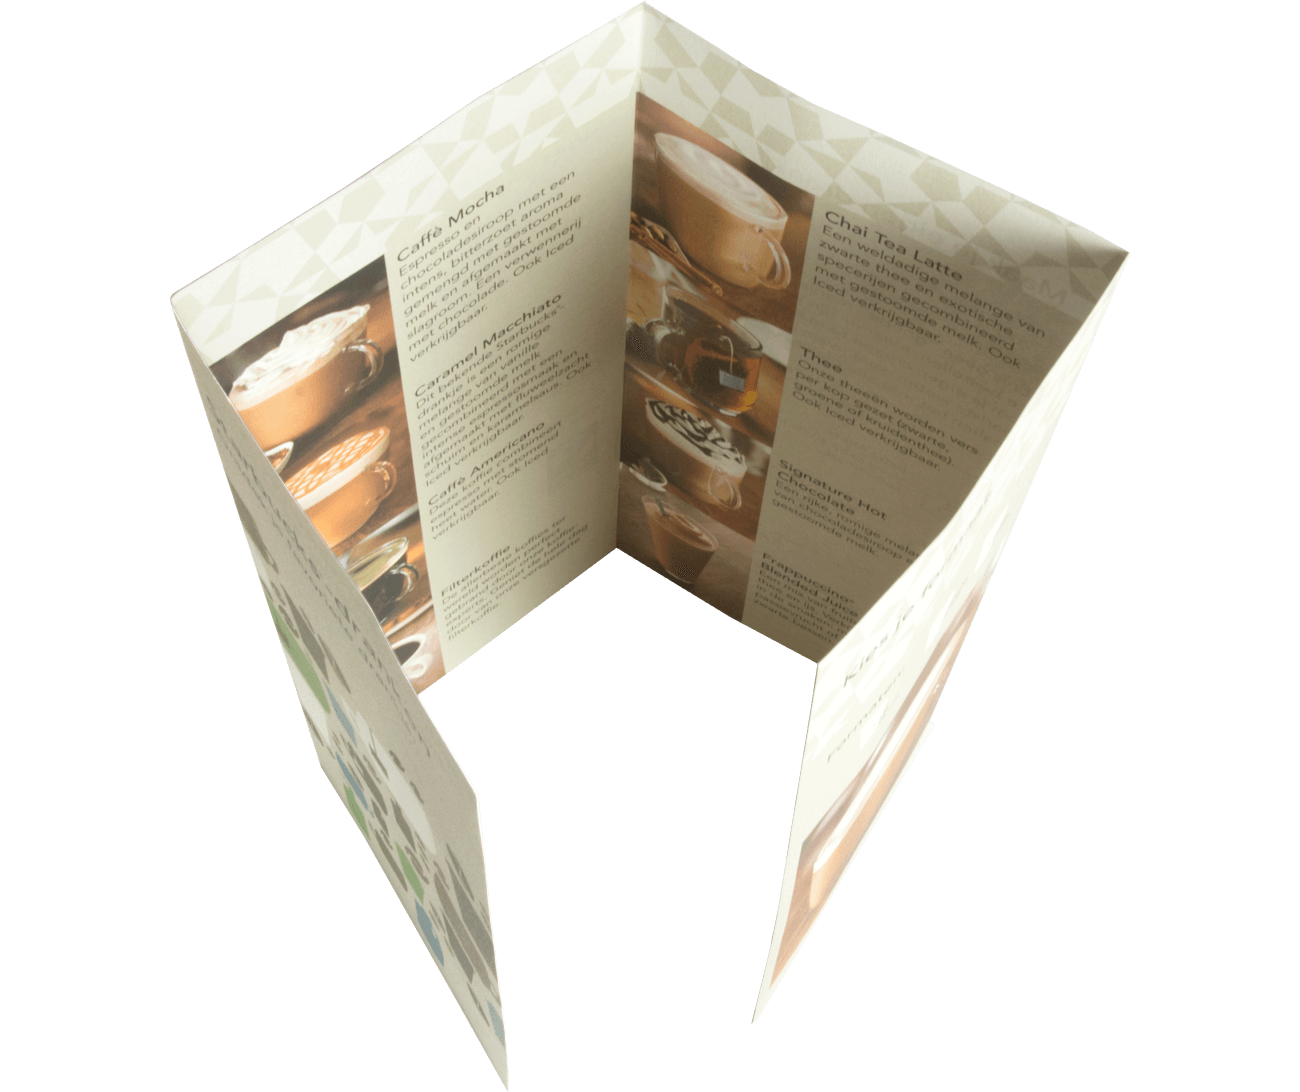 Folders 4-luik gesloten luikvouw (A4 staand)